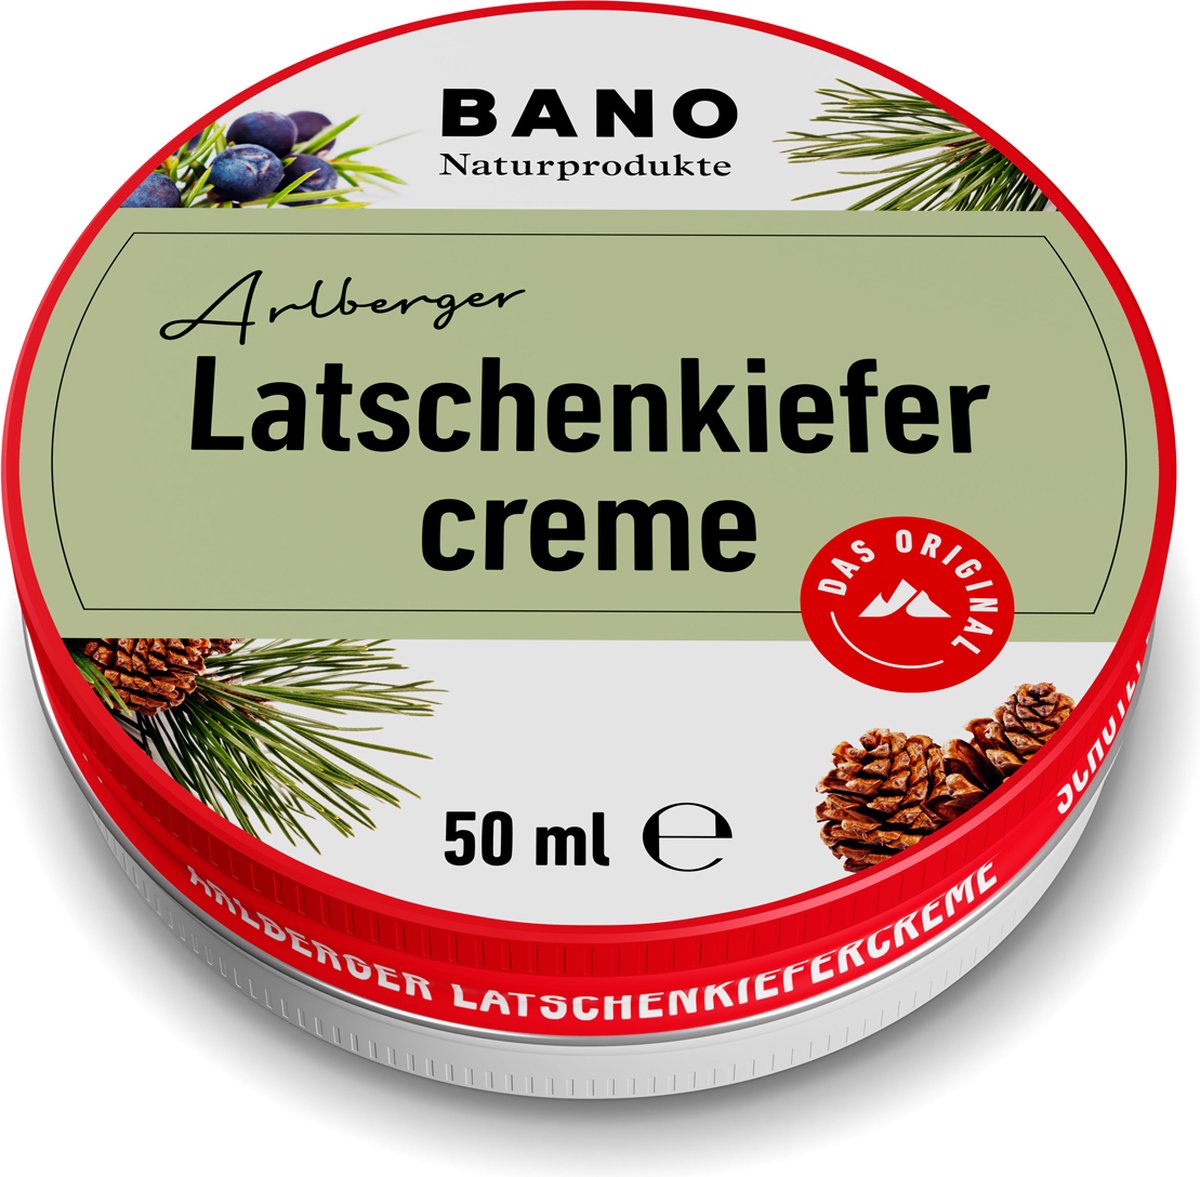 Bano Latschenkiefer | Originele Latschenkiefer Zalf | Bruiningsolie | Mountain Pine | Latschenkiefer salbe | Skilerarenvet |Tiroler Latschenkiefer | Arlberger Latschenkiefer | 50 ml | Creme